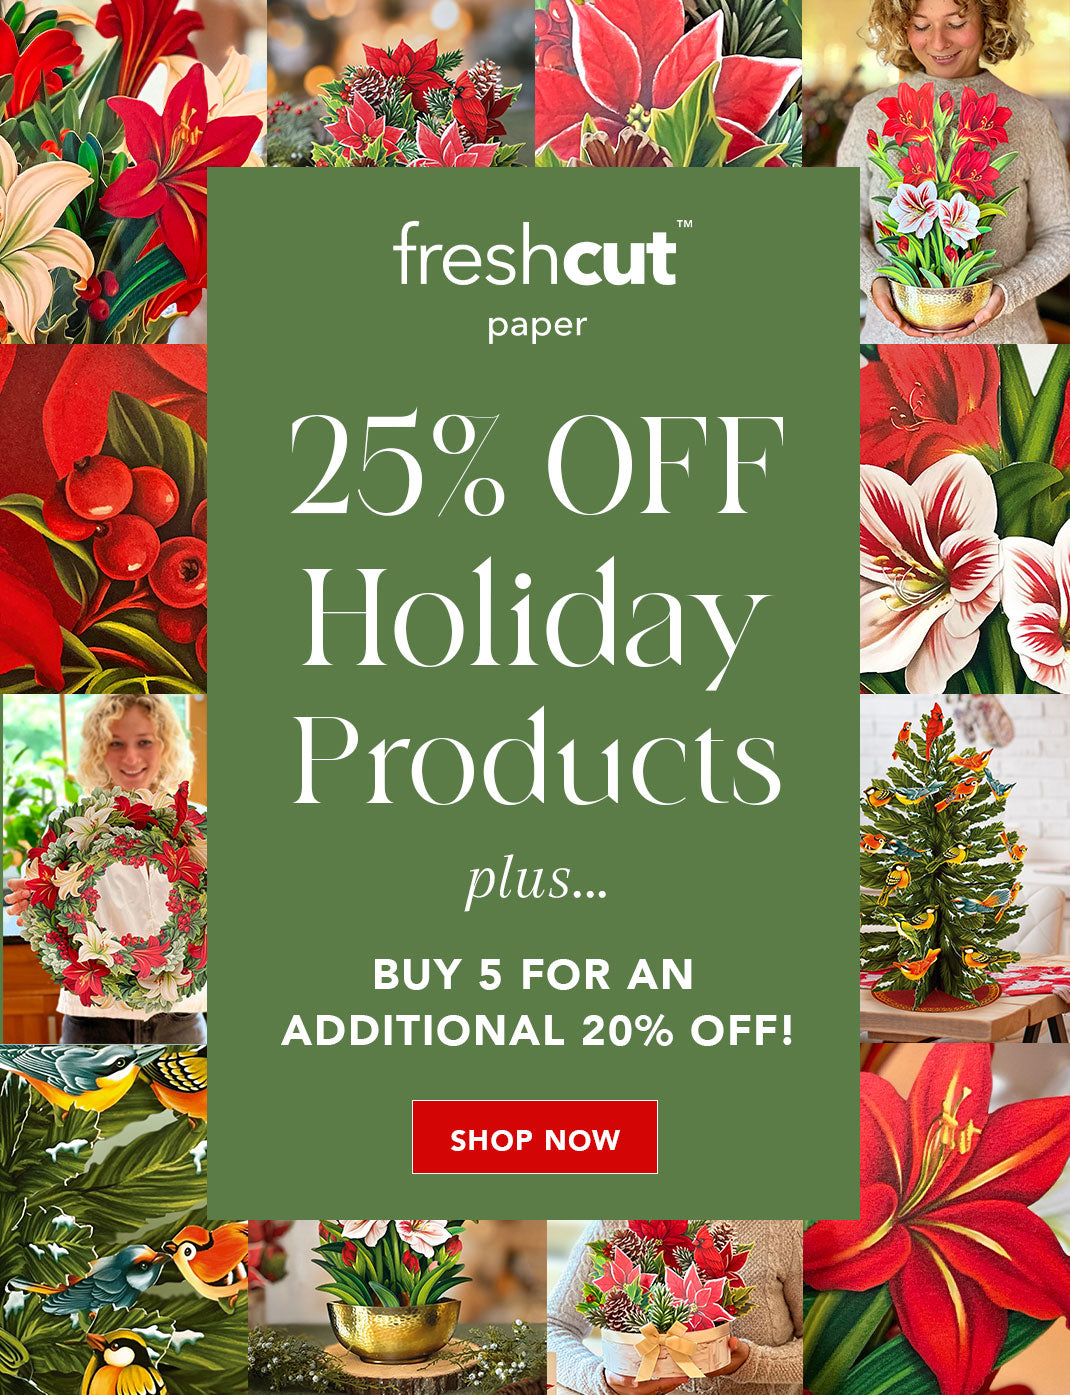 FreshCut Paper LLC - Market Floor Display includes 6 Long Market Tins)